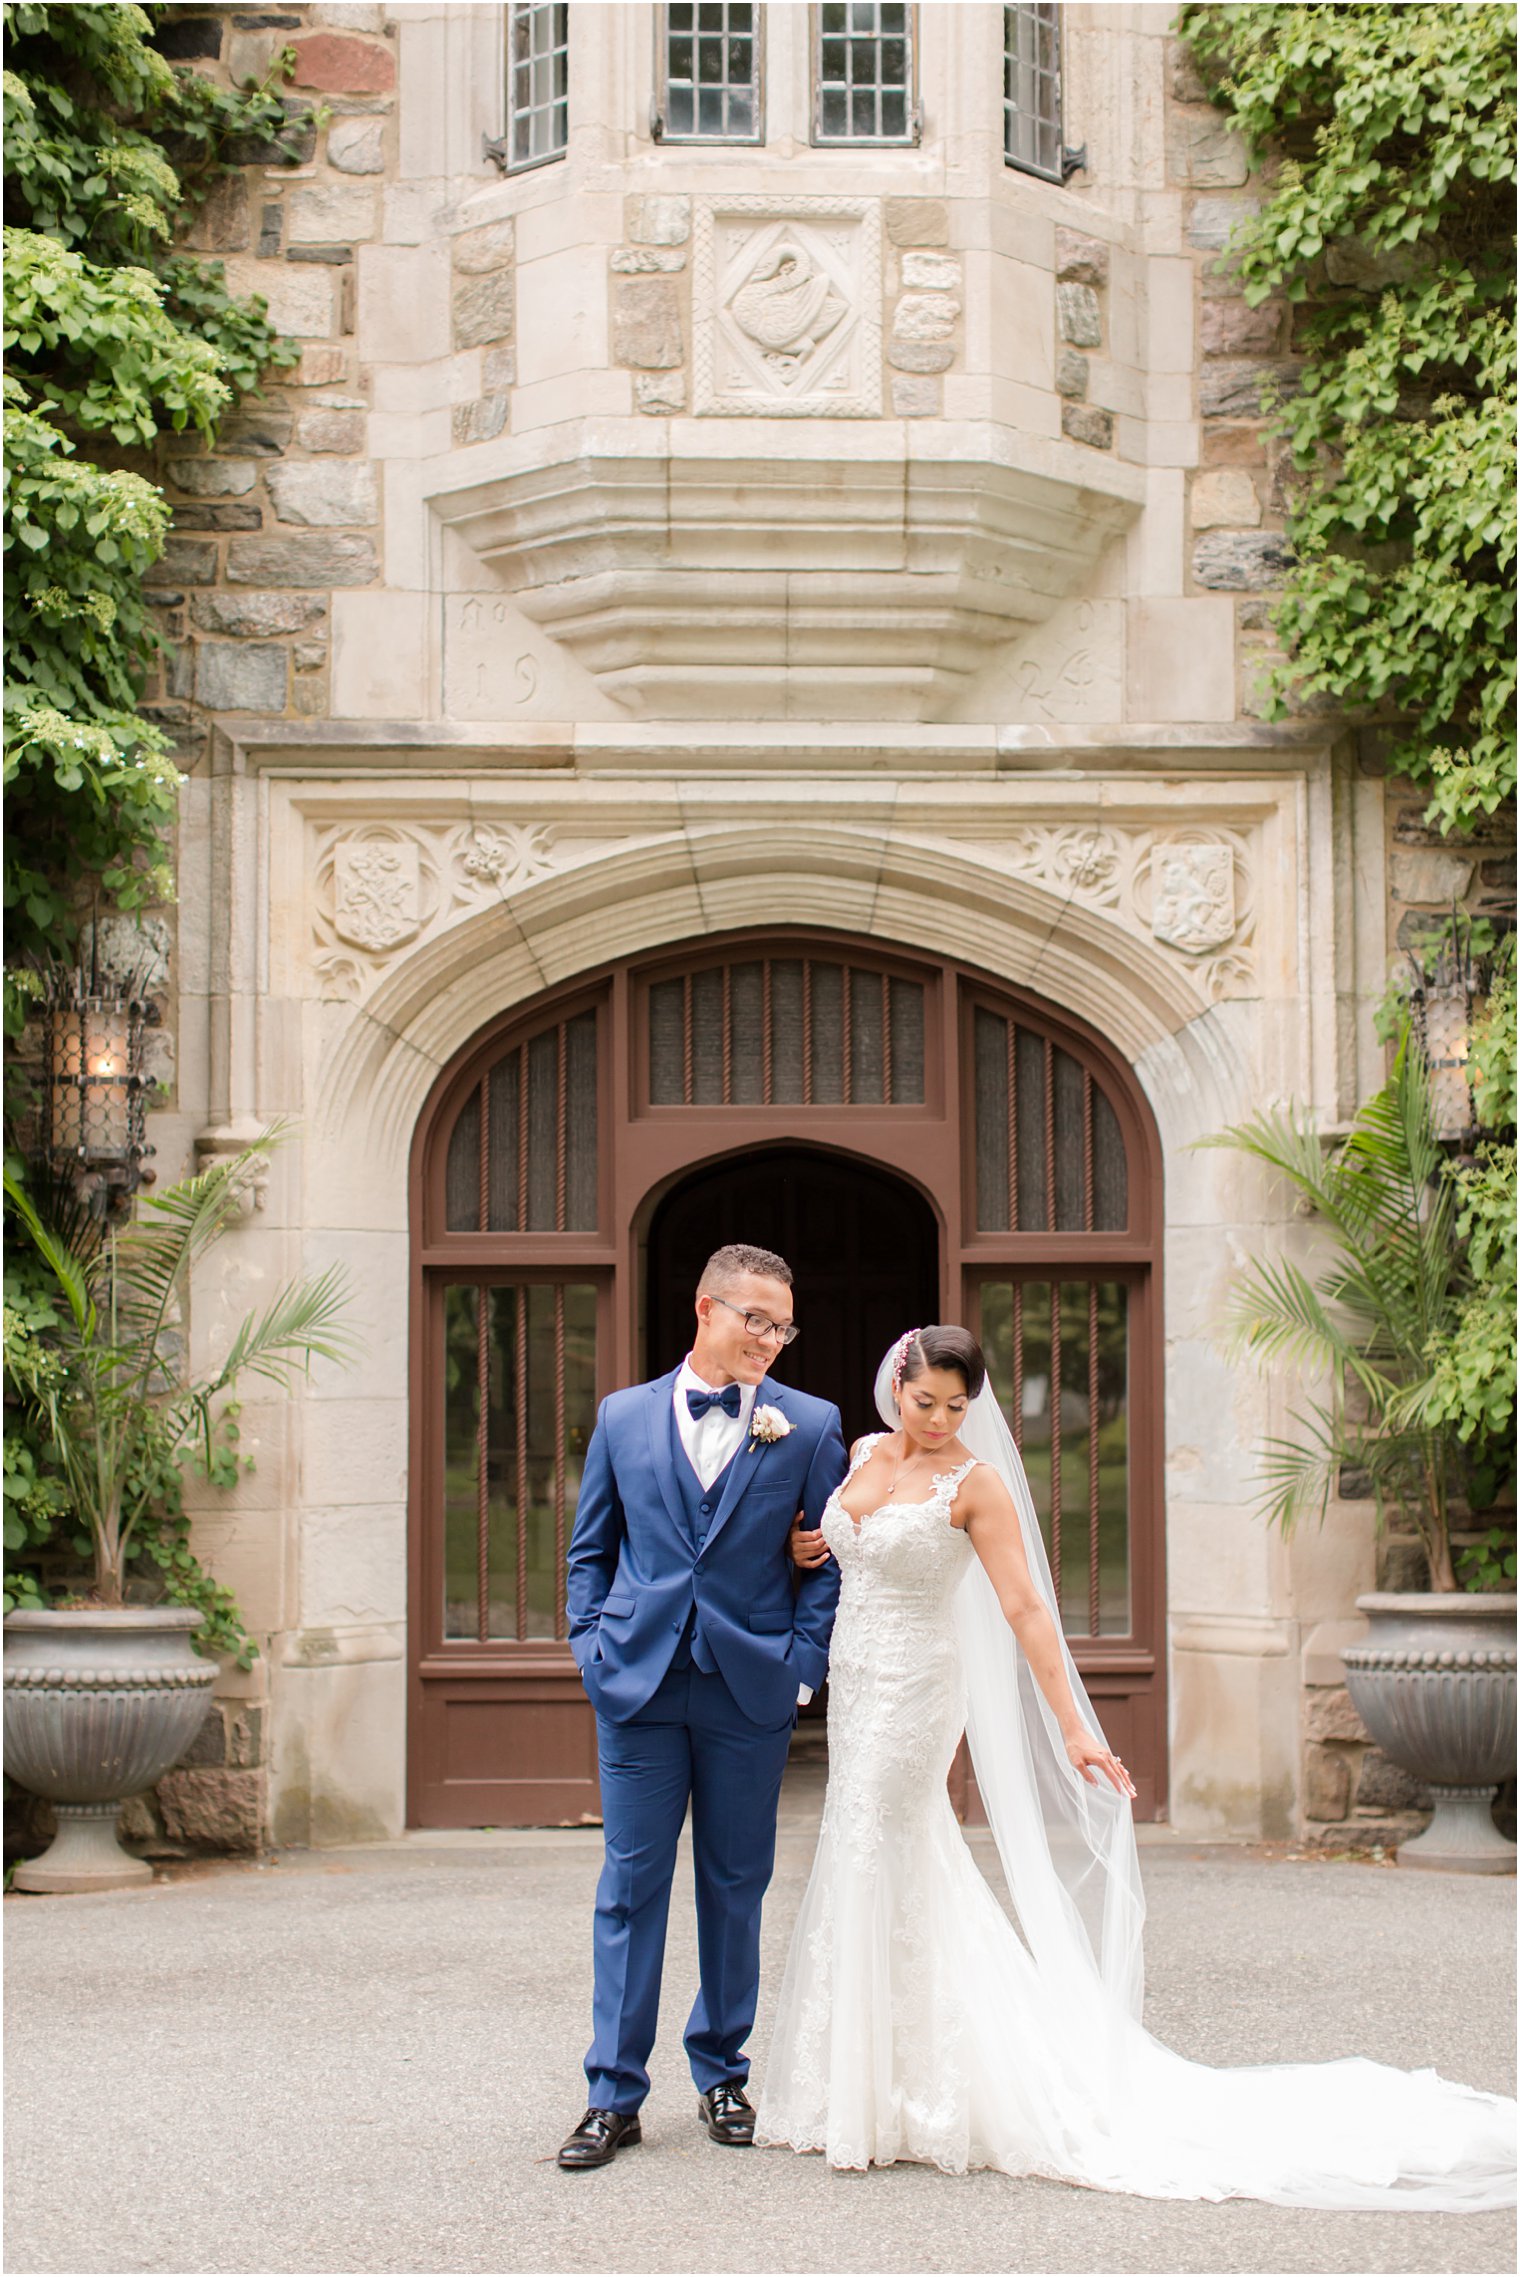 elegant portrait of bride and groom | The Castle at Skylands Manor Wedding Photos by Idalia Photography